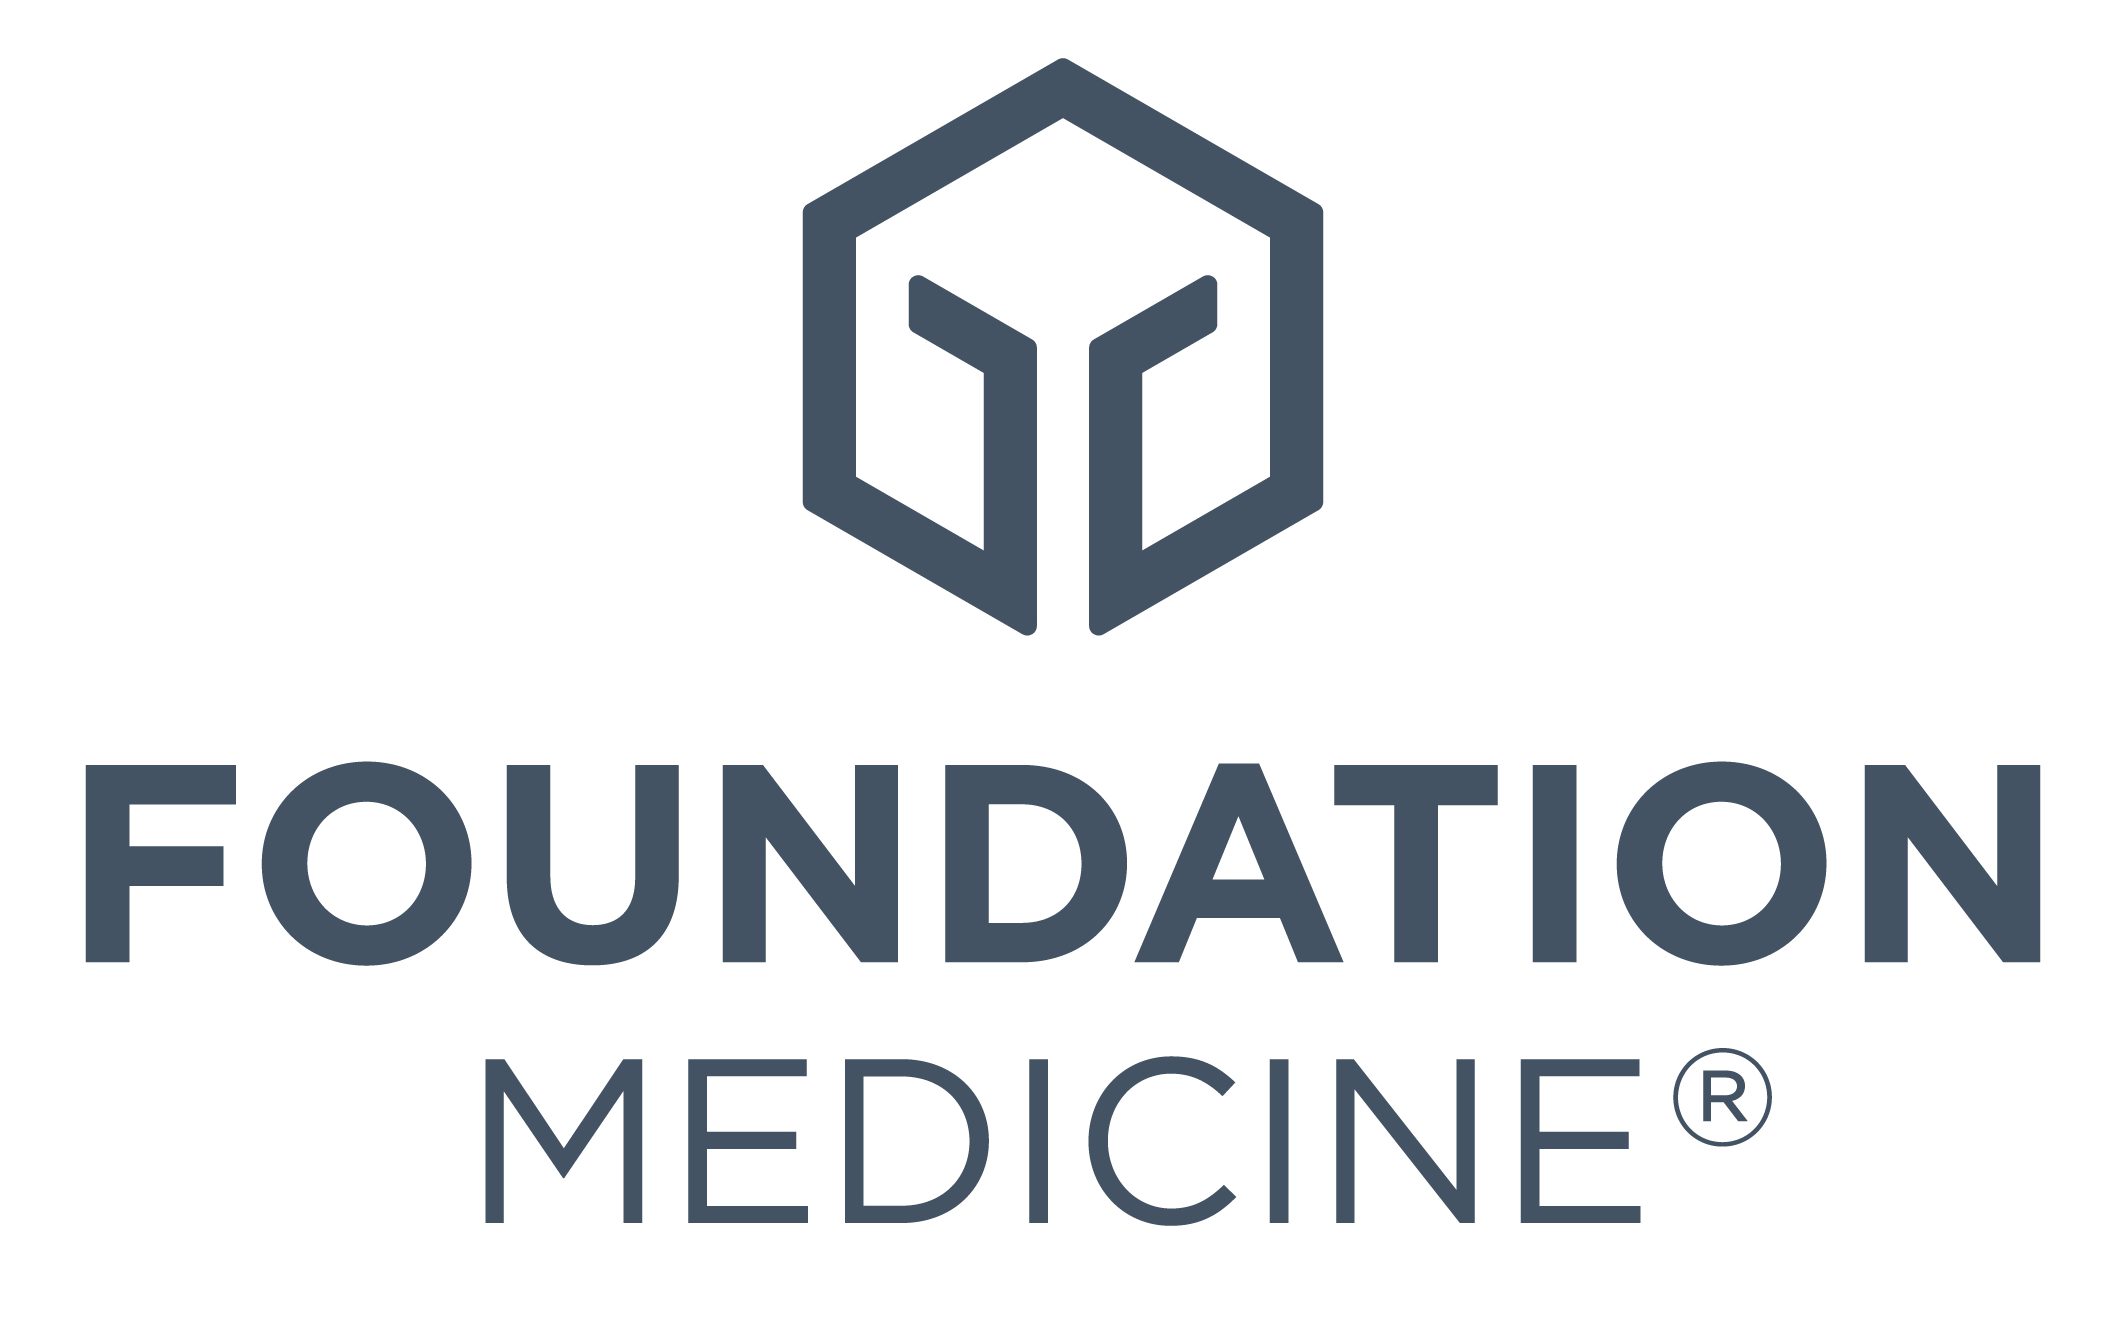 Foundation Medicine logo